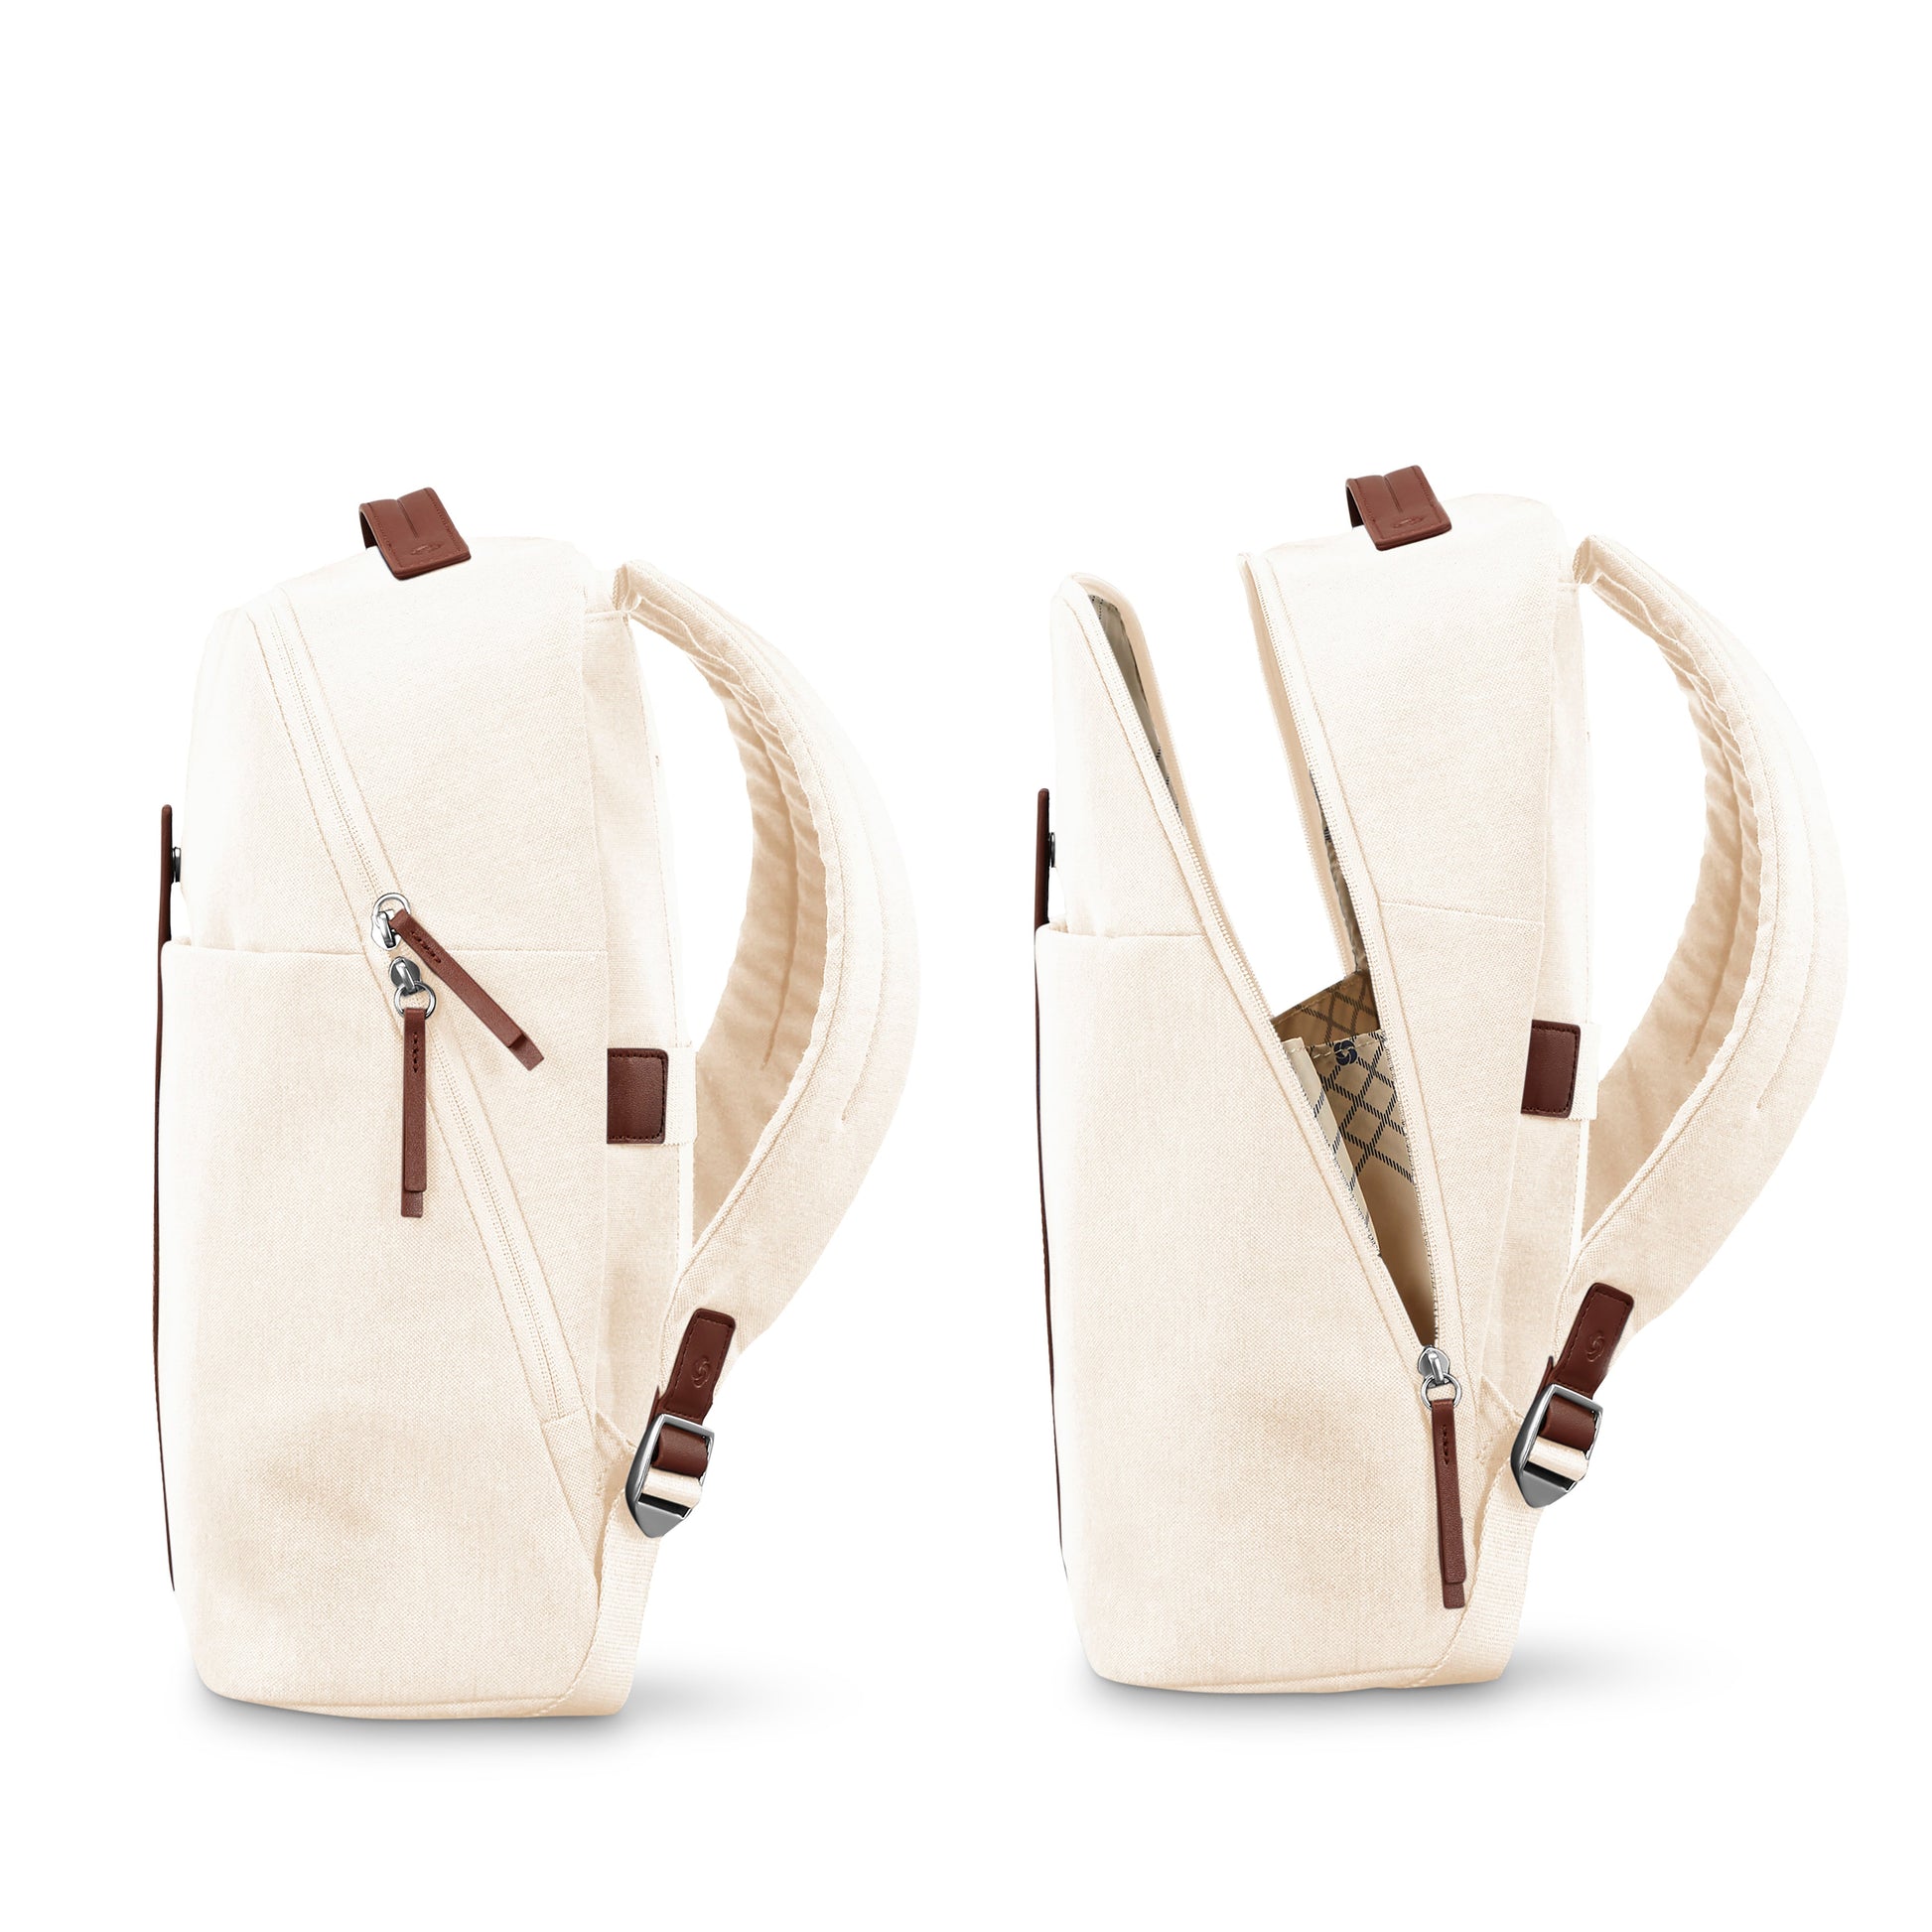 Samsonite Virtuosa Backpack 14.1"